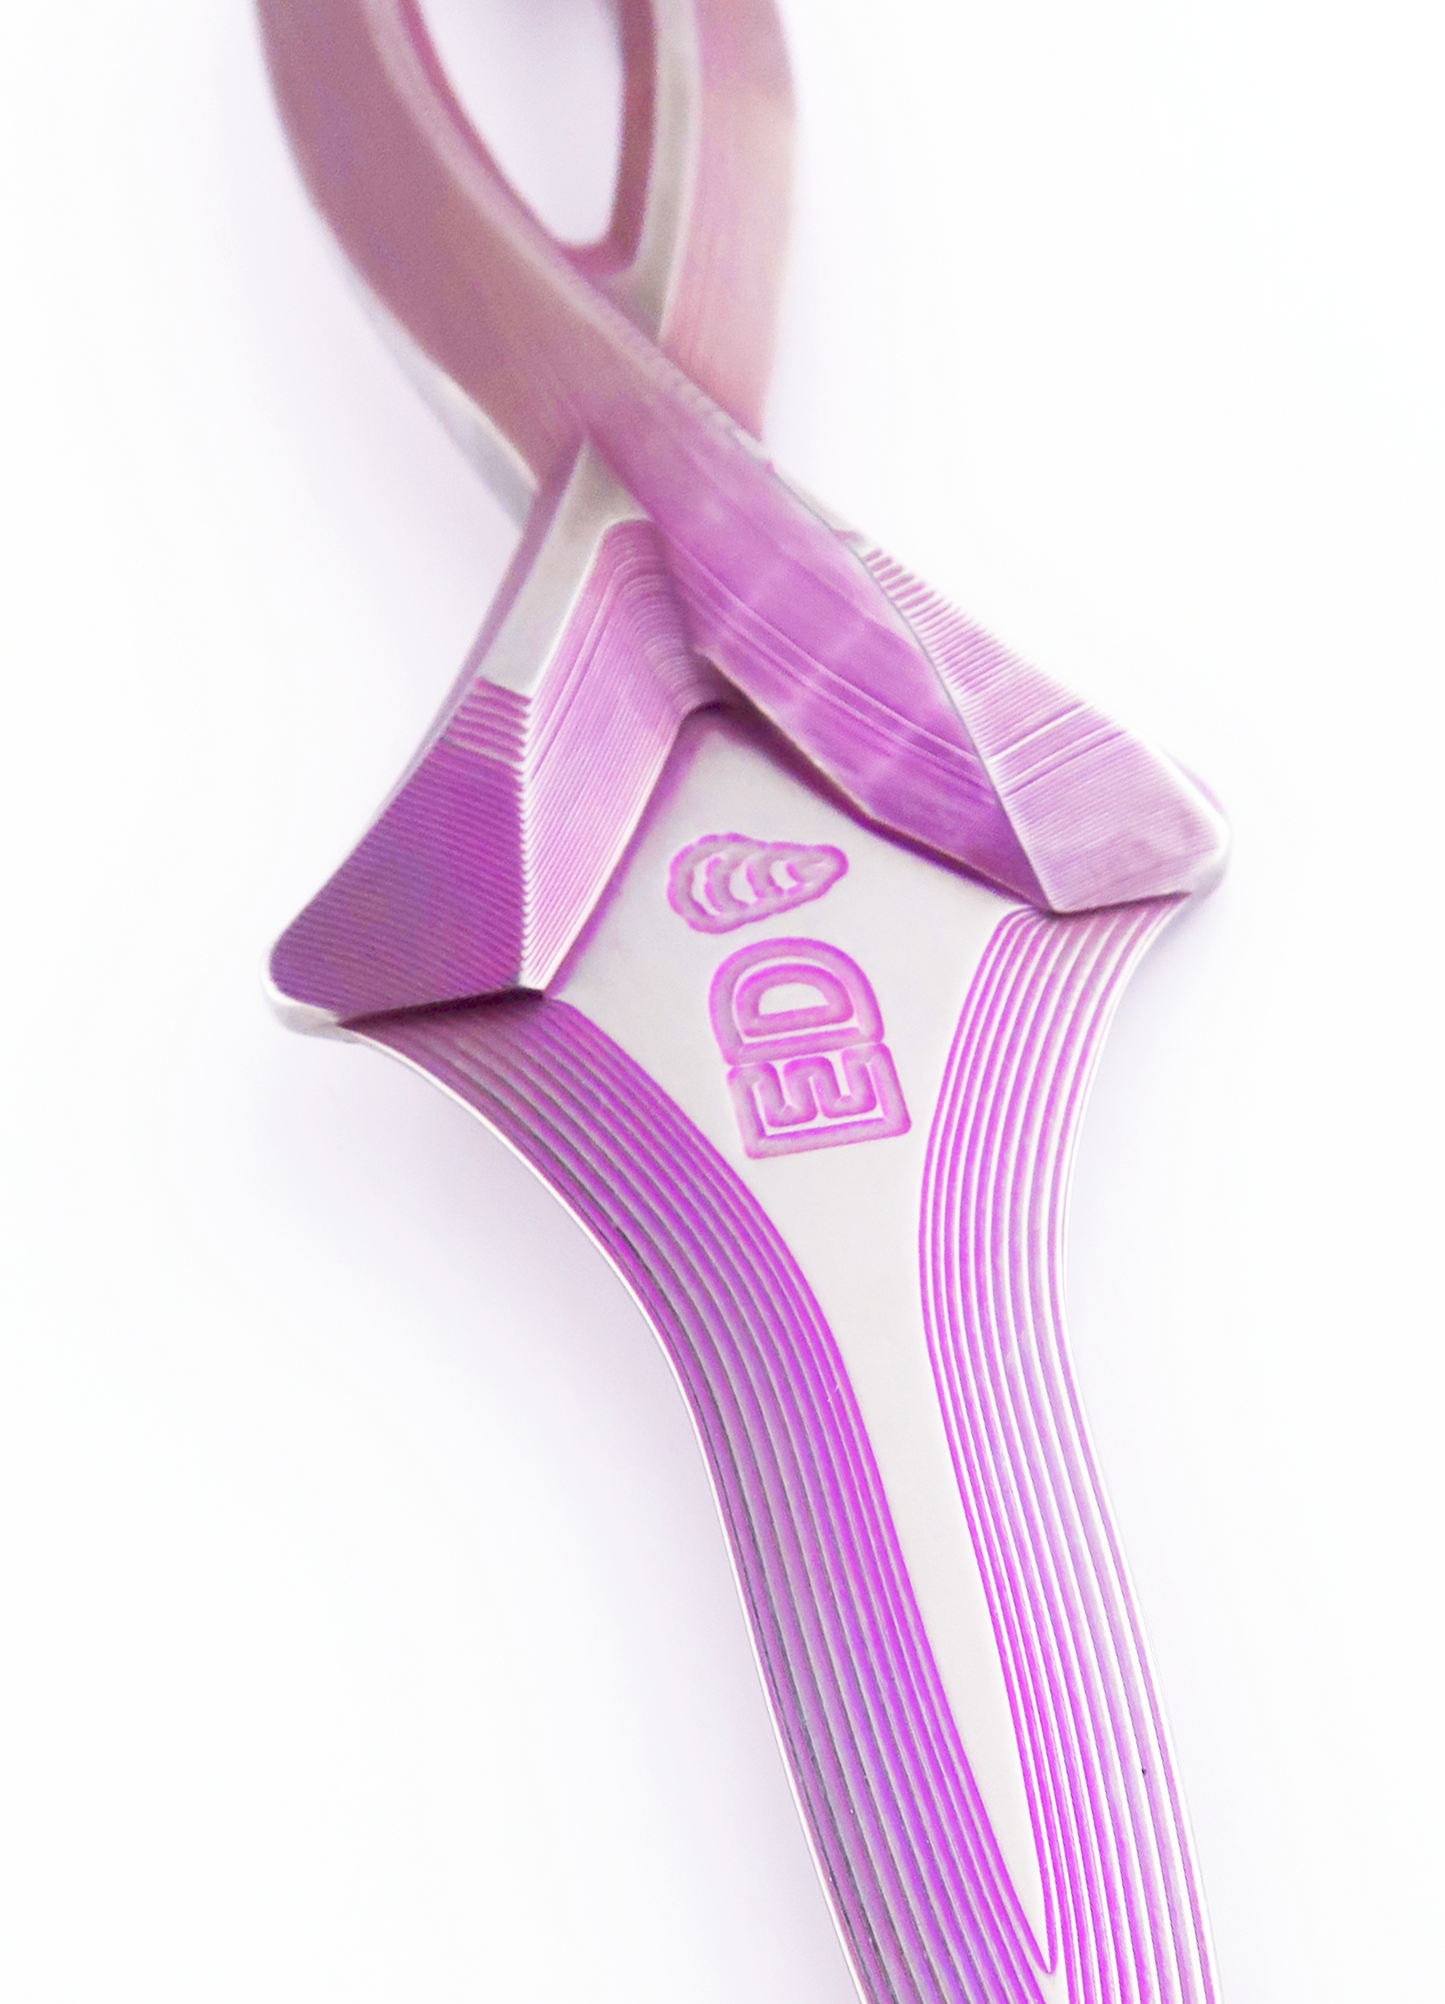 The Hugo Full Titanium Oyster Knife - Pink